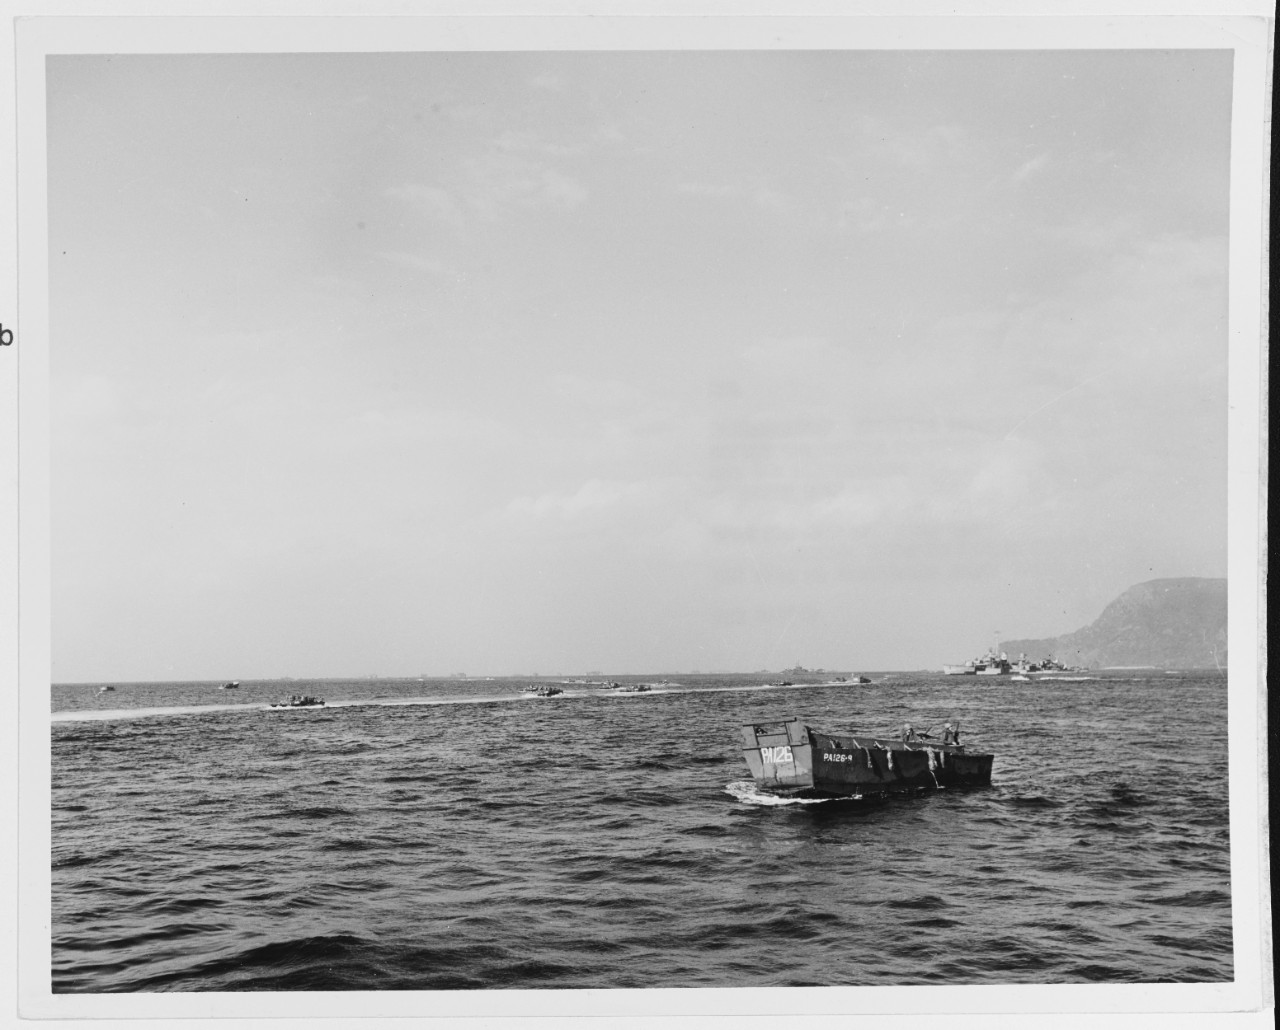 Okinawa, Ryukyus Island, March 1945